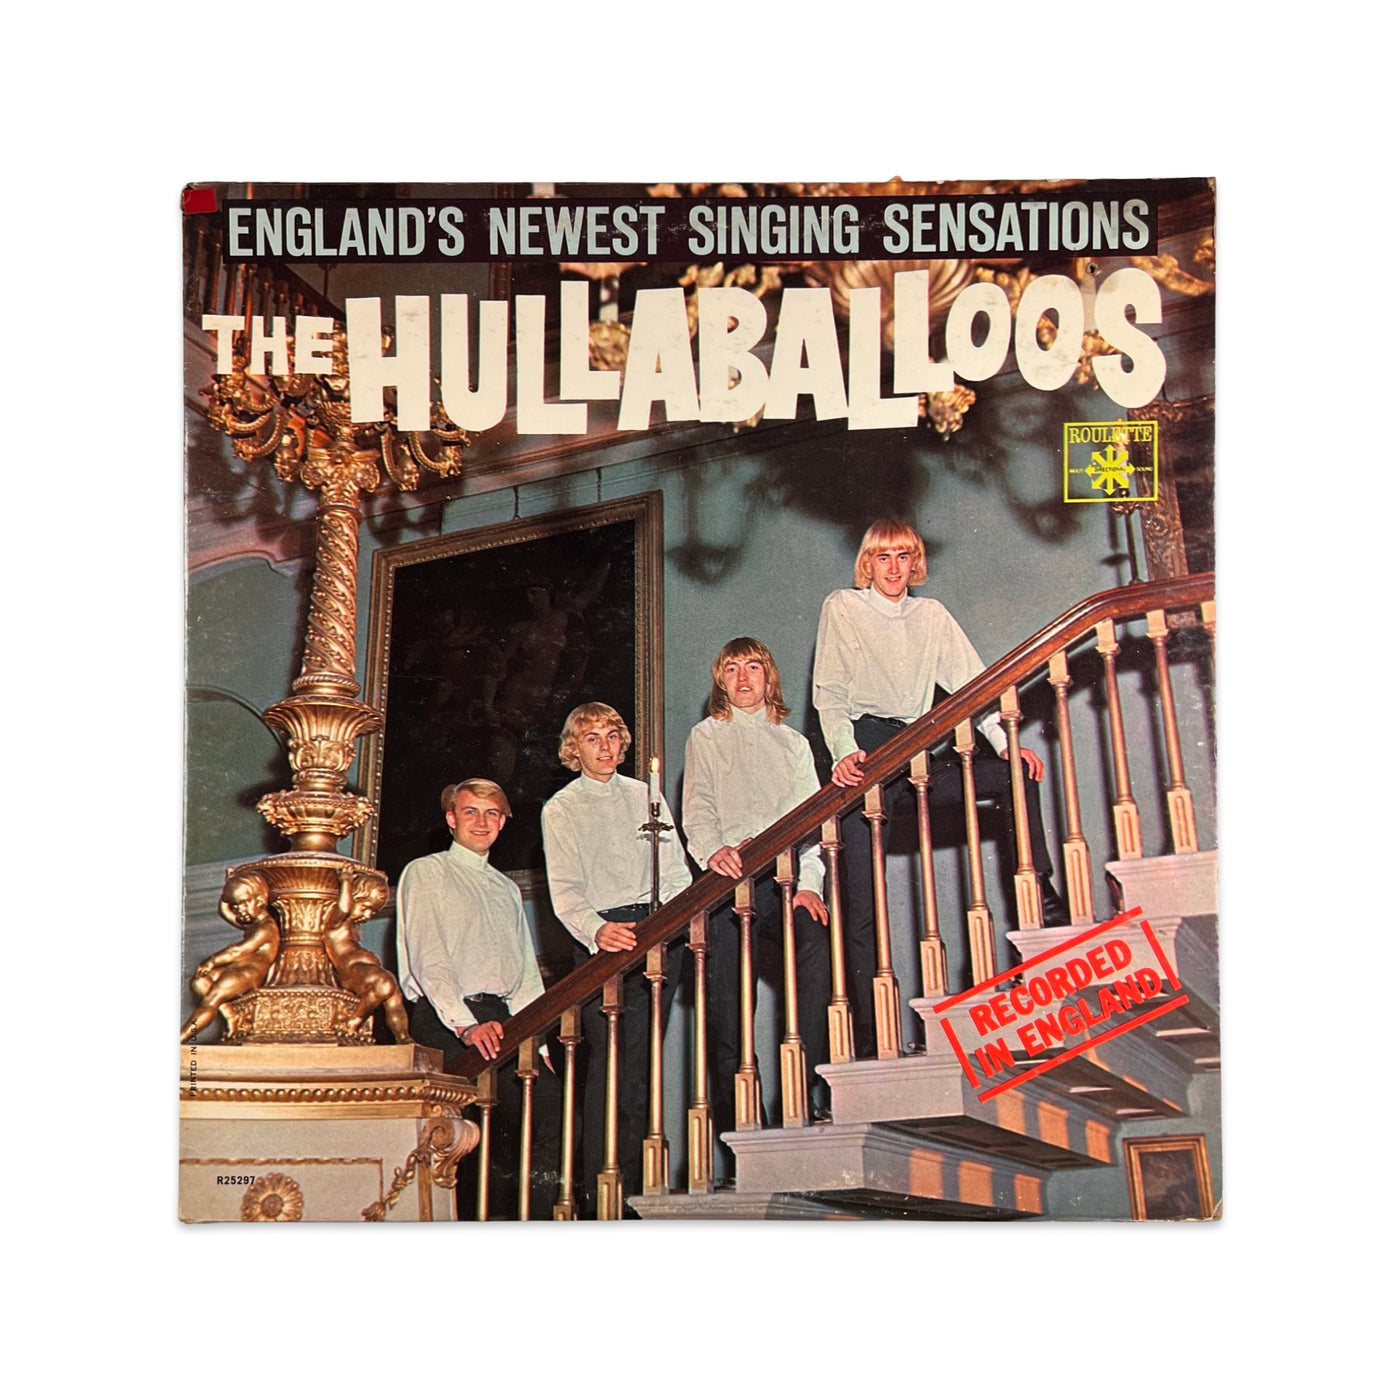 The Hullaballoos – The Hullaballoos